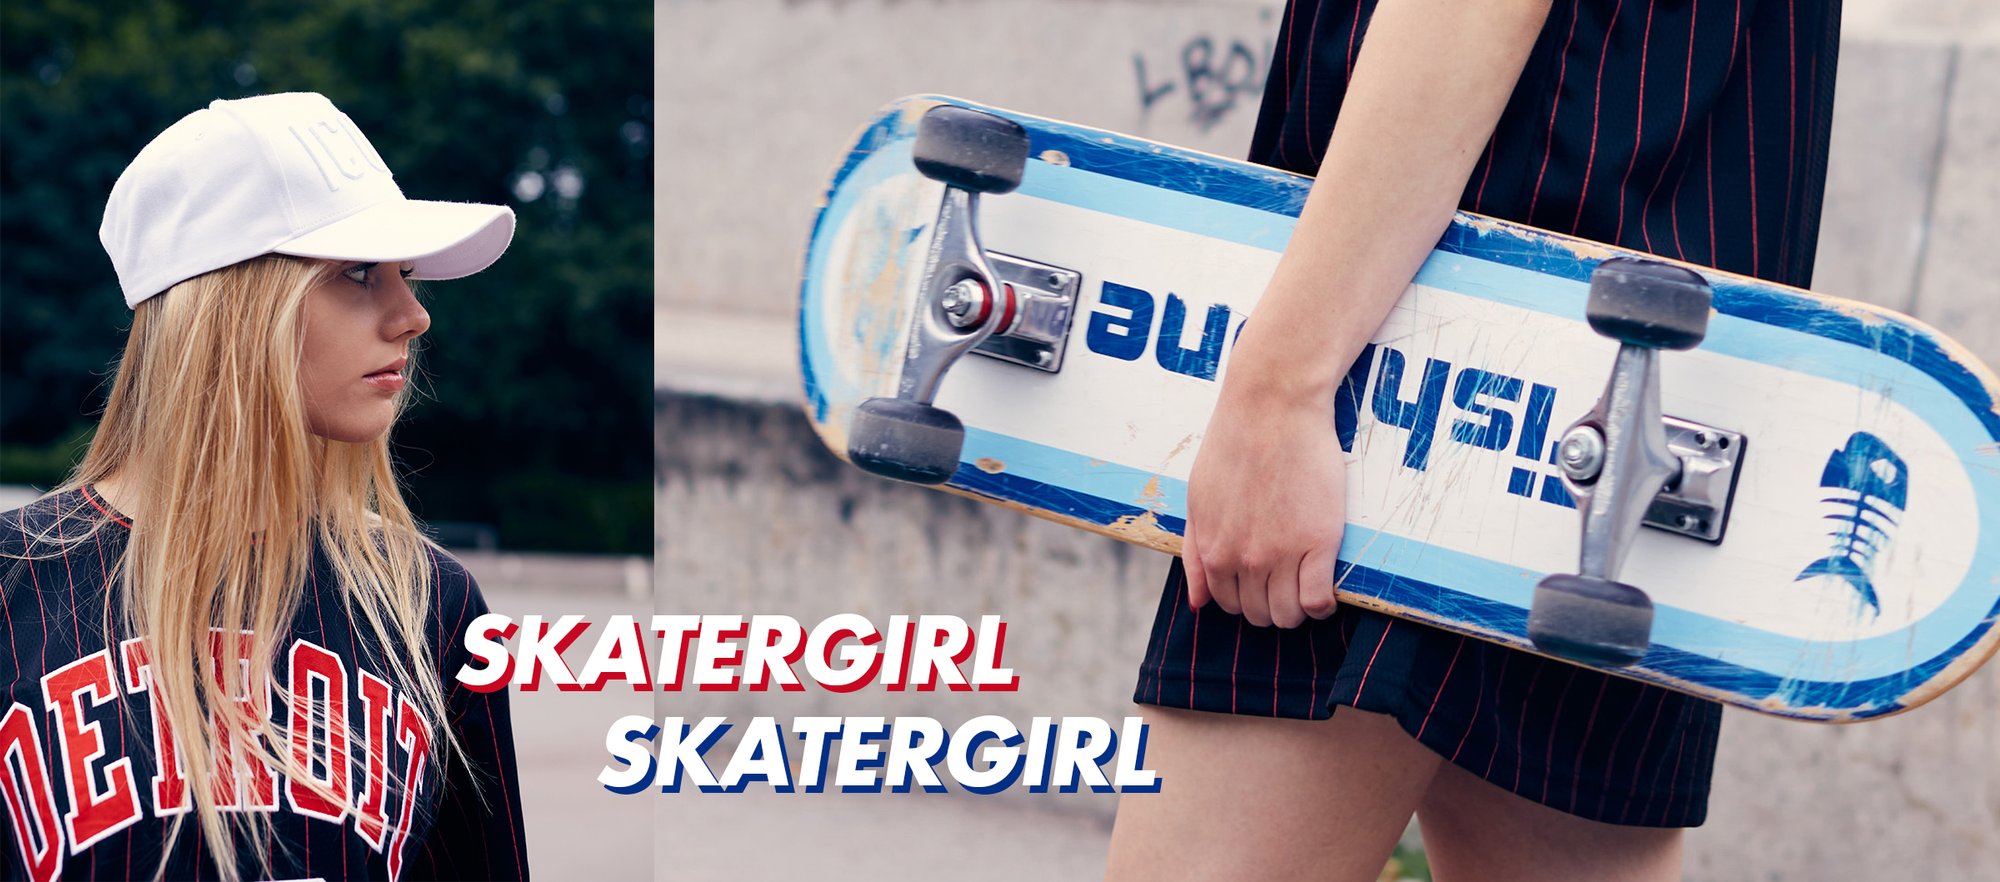 Skater girl fashion